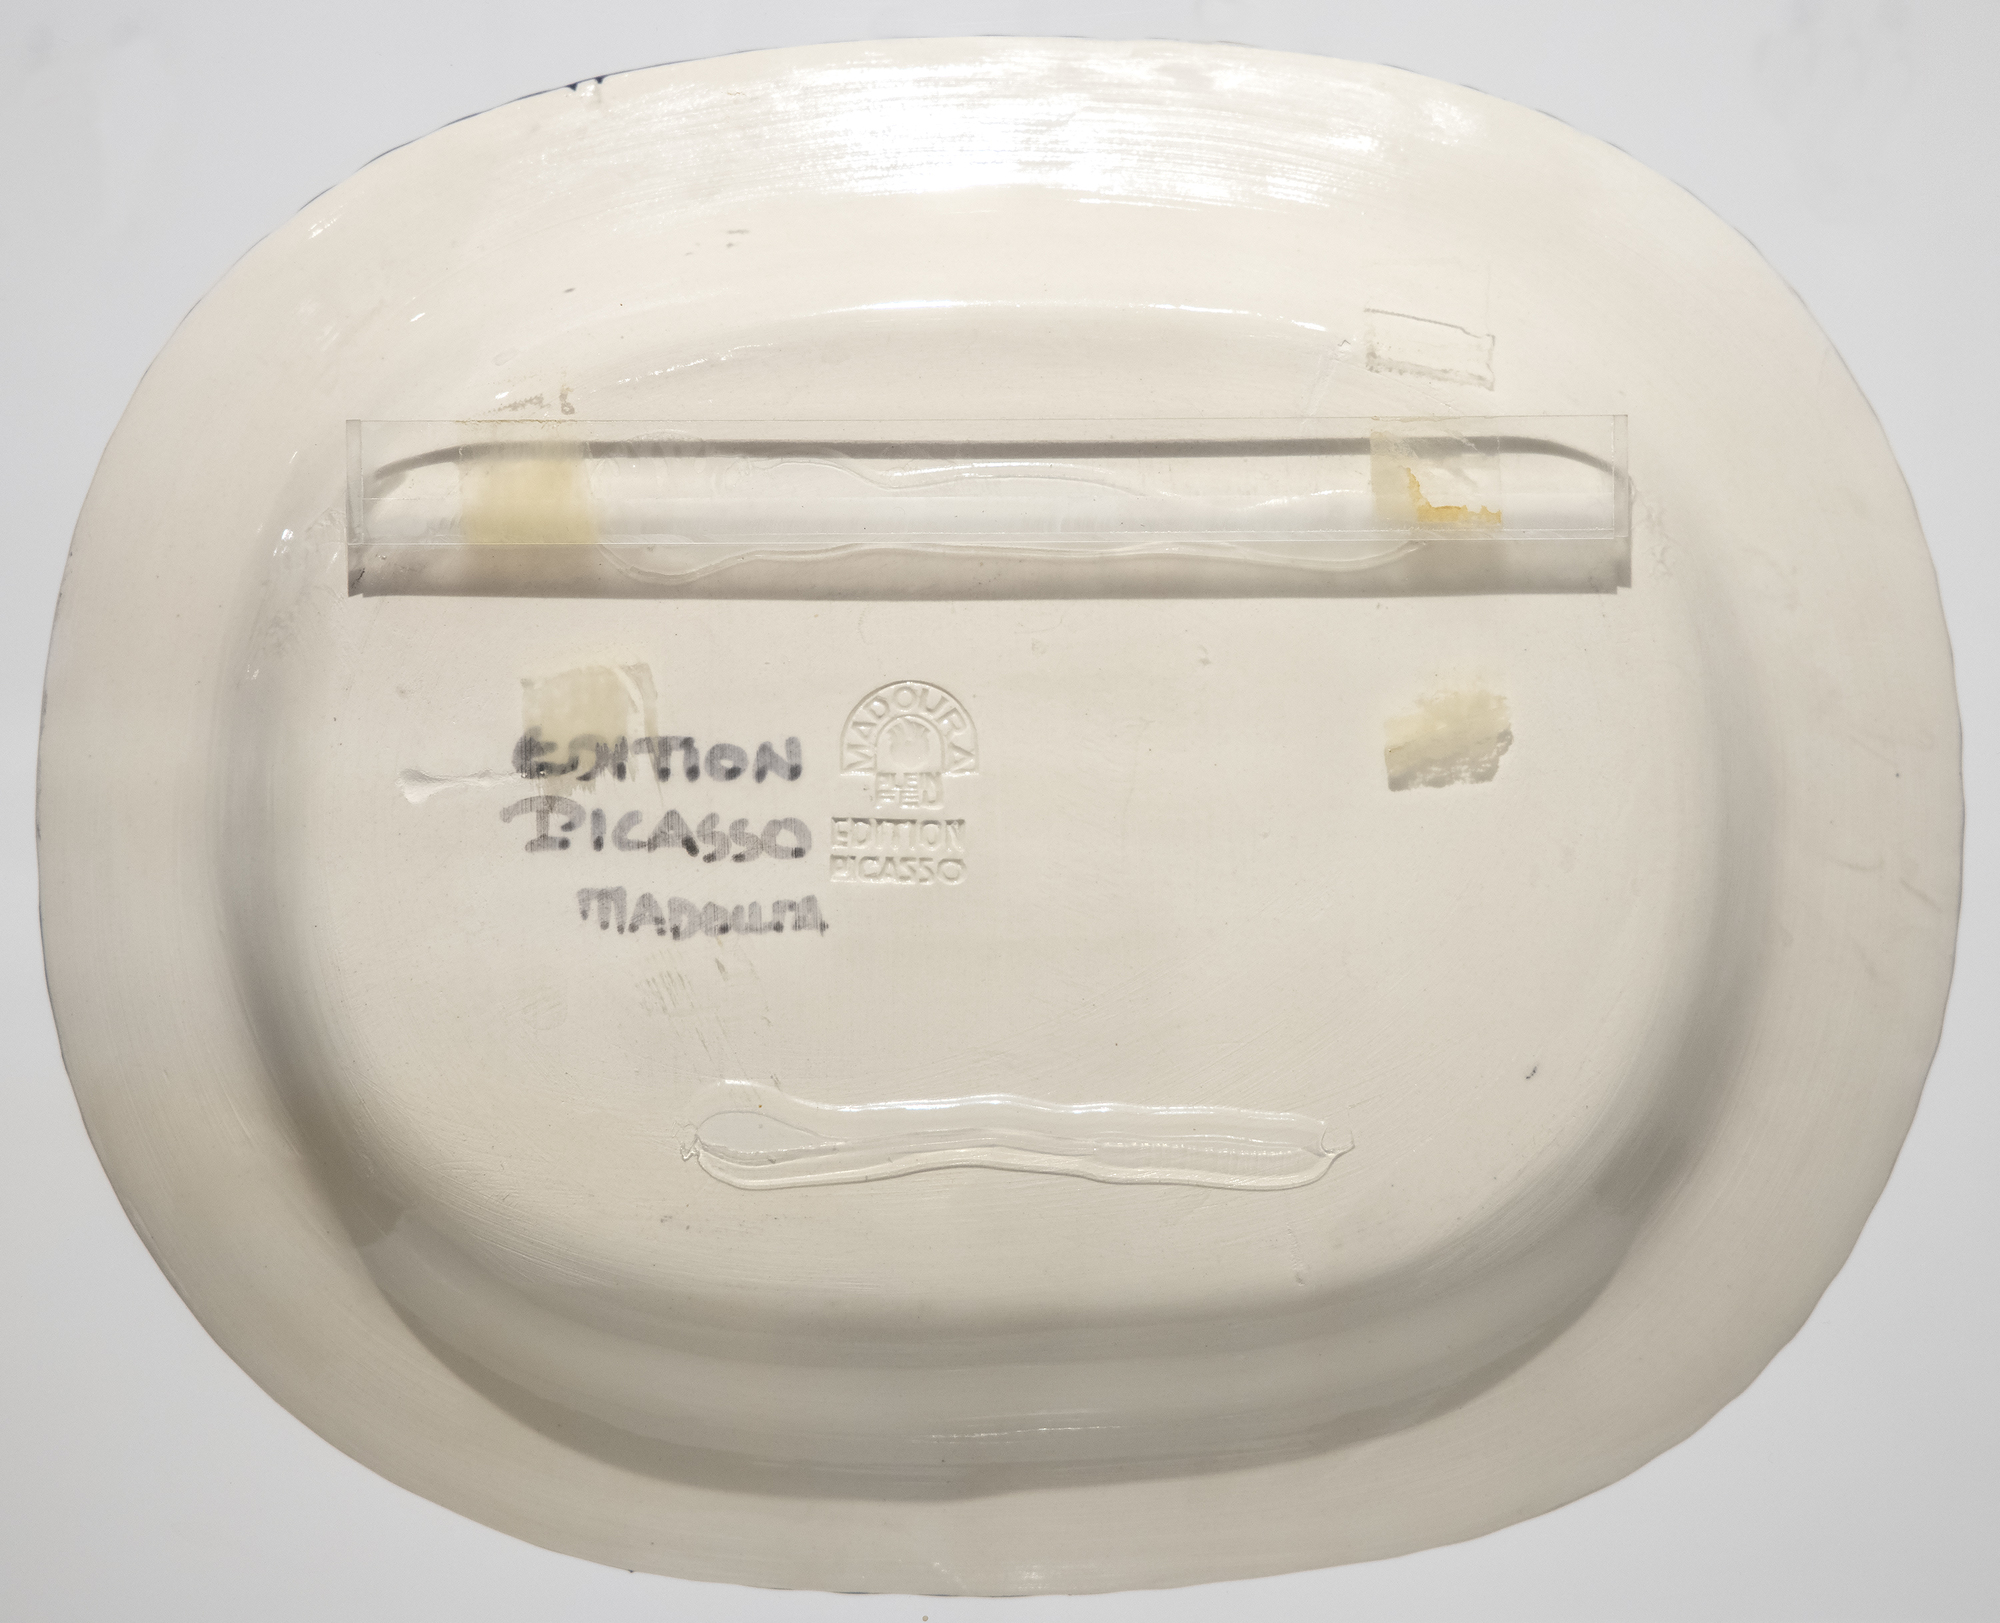 PABLO PICASSO - La Danse - white eathenware ceramic plate, partially engraved, with colored engobe and glaze - 12 1/2 x 15 in.